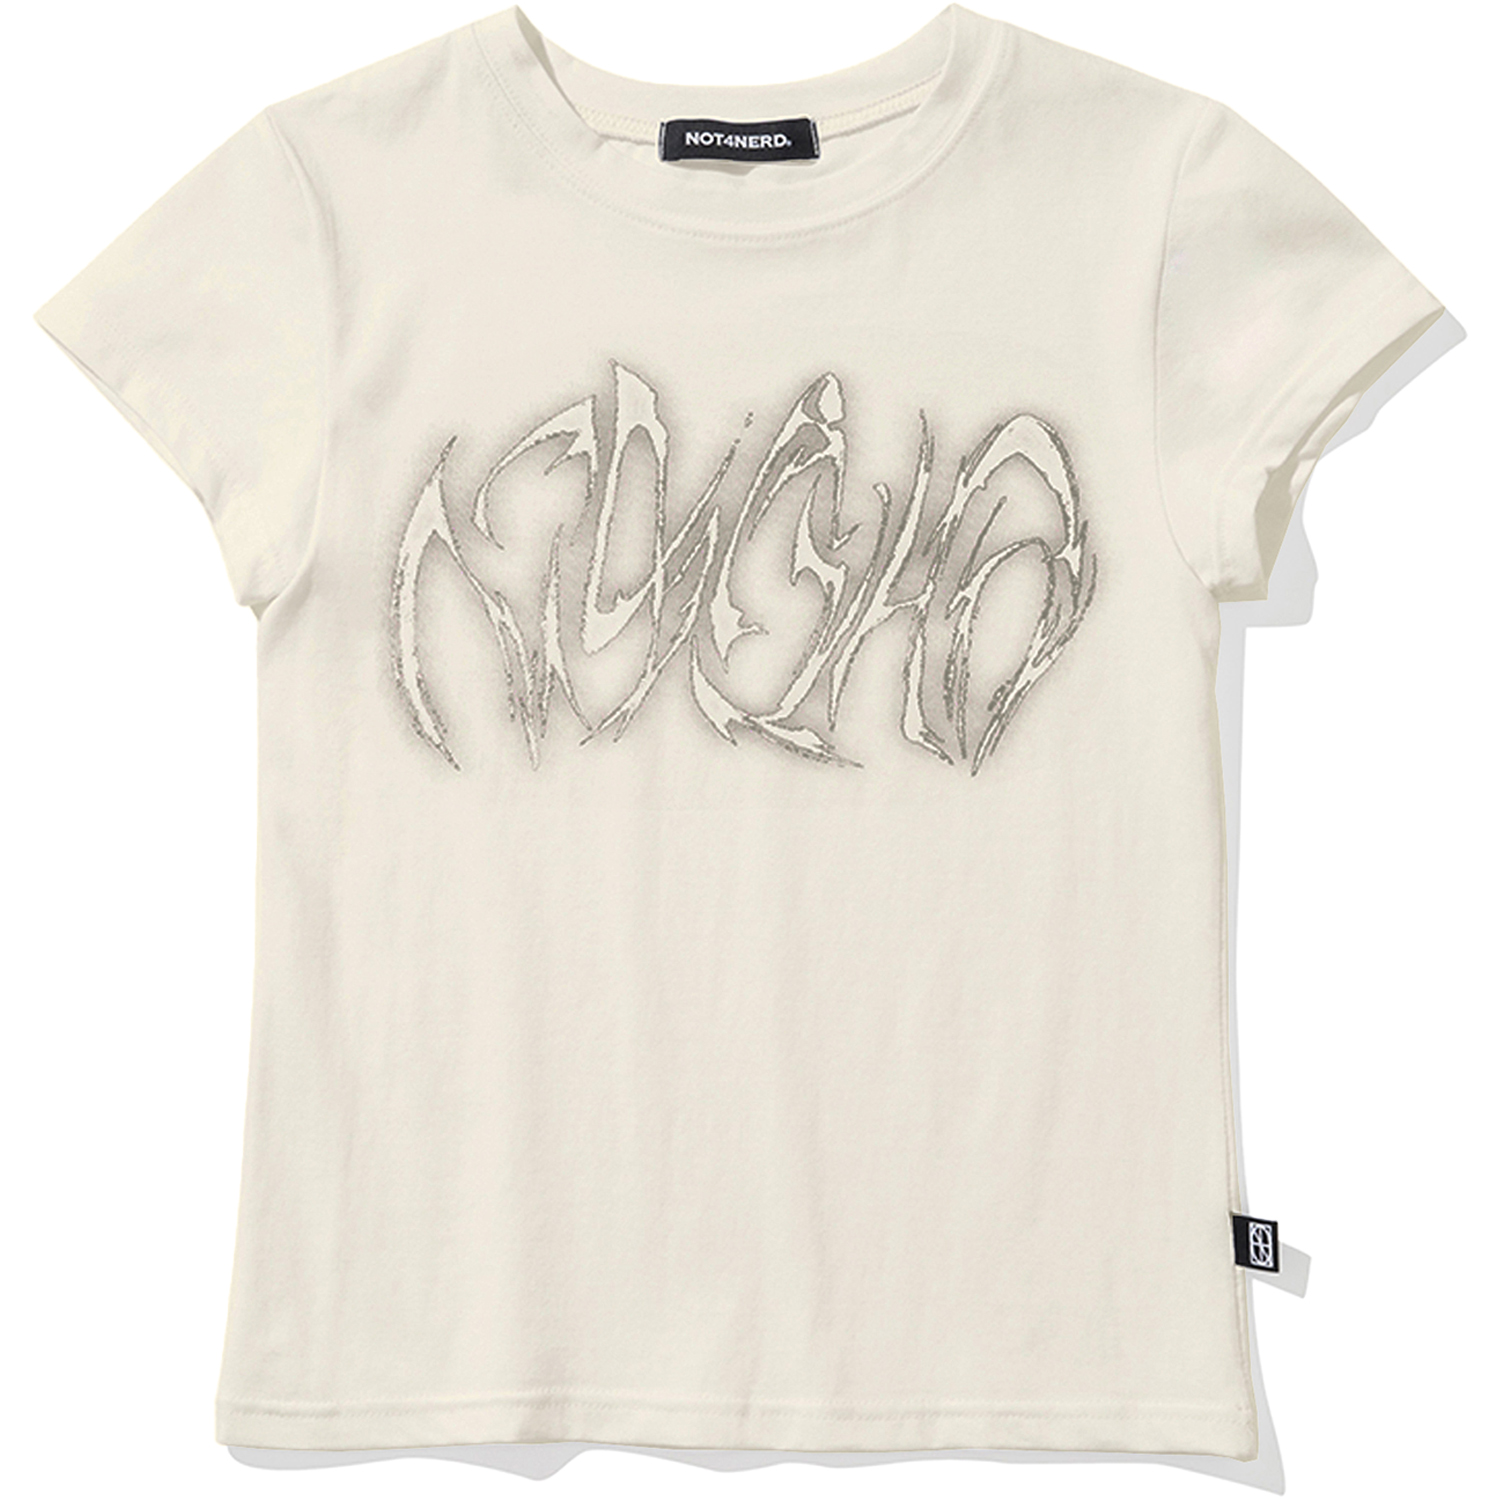 W Blur Boomerang Logo T-Shirts - Ivory,NOT4NERD